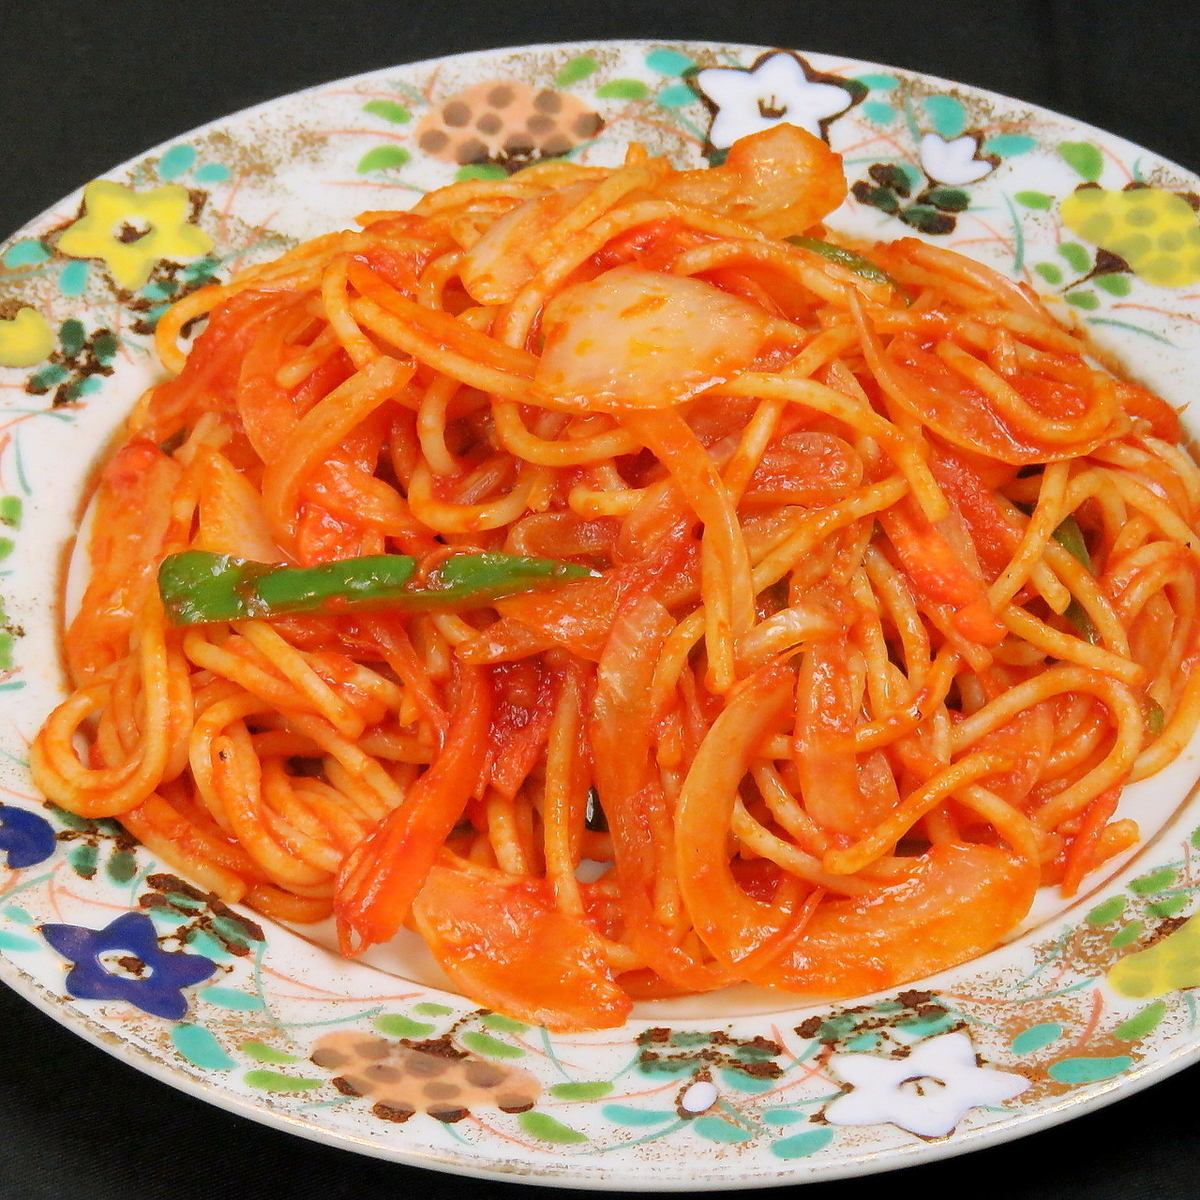 Nostalgic spaghetti spaghetti is surprisingly 99 JPY (incl. tax)!! Plenty of B-grade gourmet dishes♪